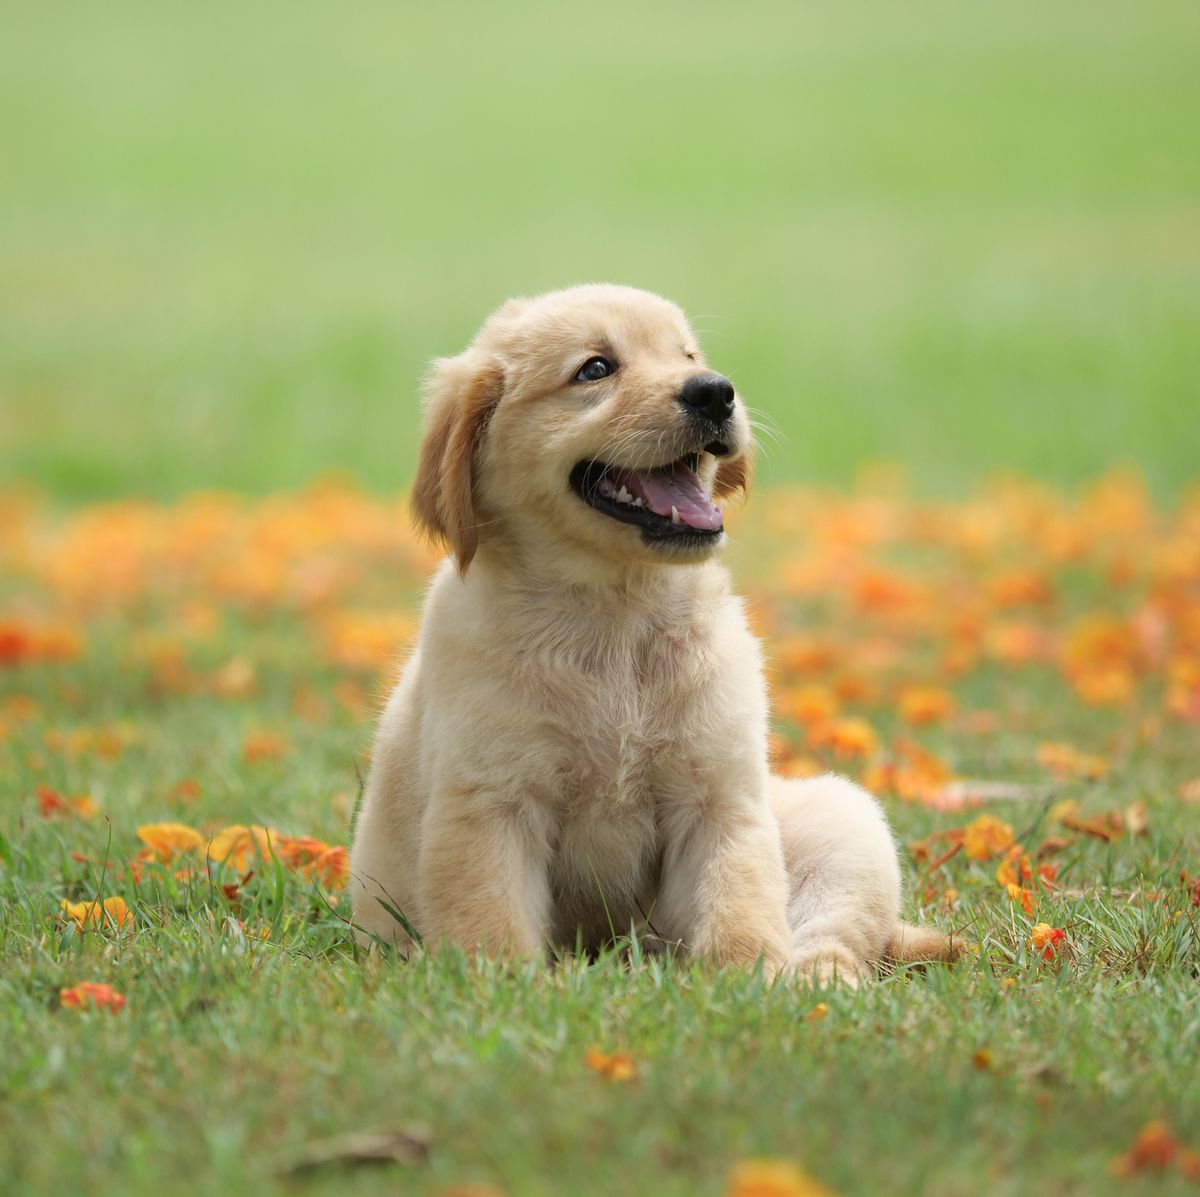 https://hips.hearstapps.com/hmg-prod/images/dog-puppy-on-garden-royalty-free-image-1586966191.jpg?crop=0.752xw:1.00xh;0.175xw,0&resize=1200:*